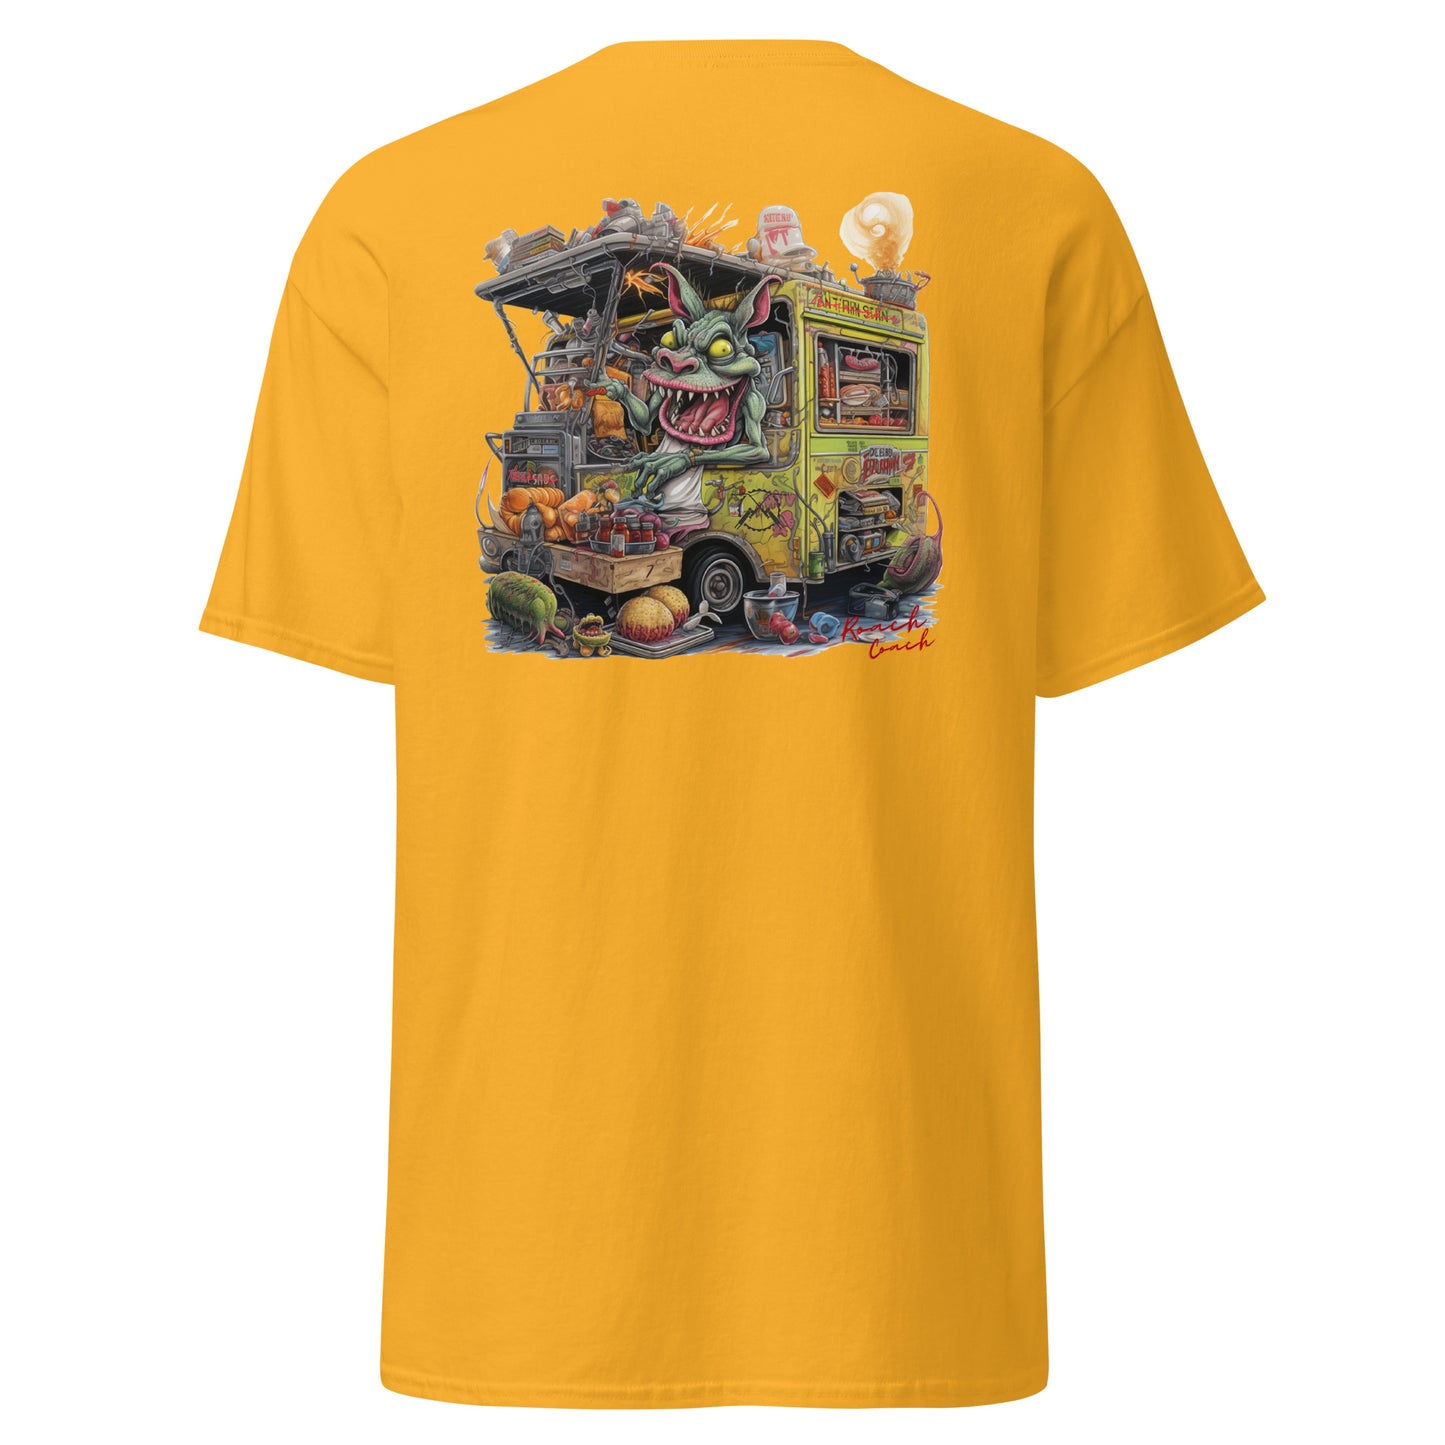 Food Truck T-shirt